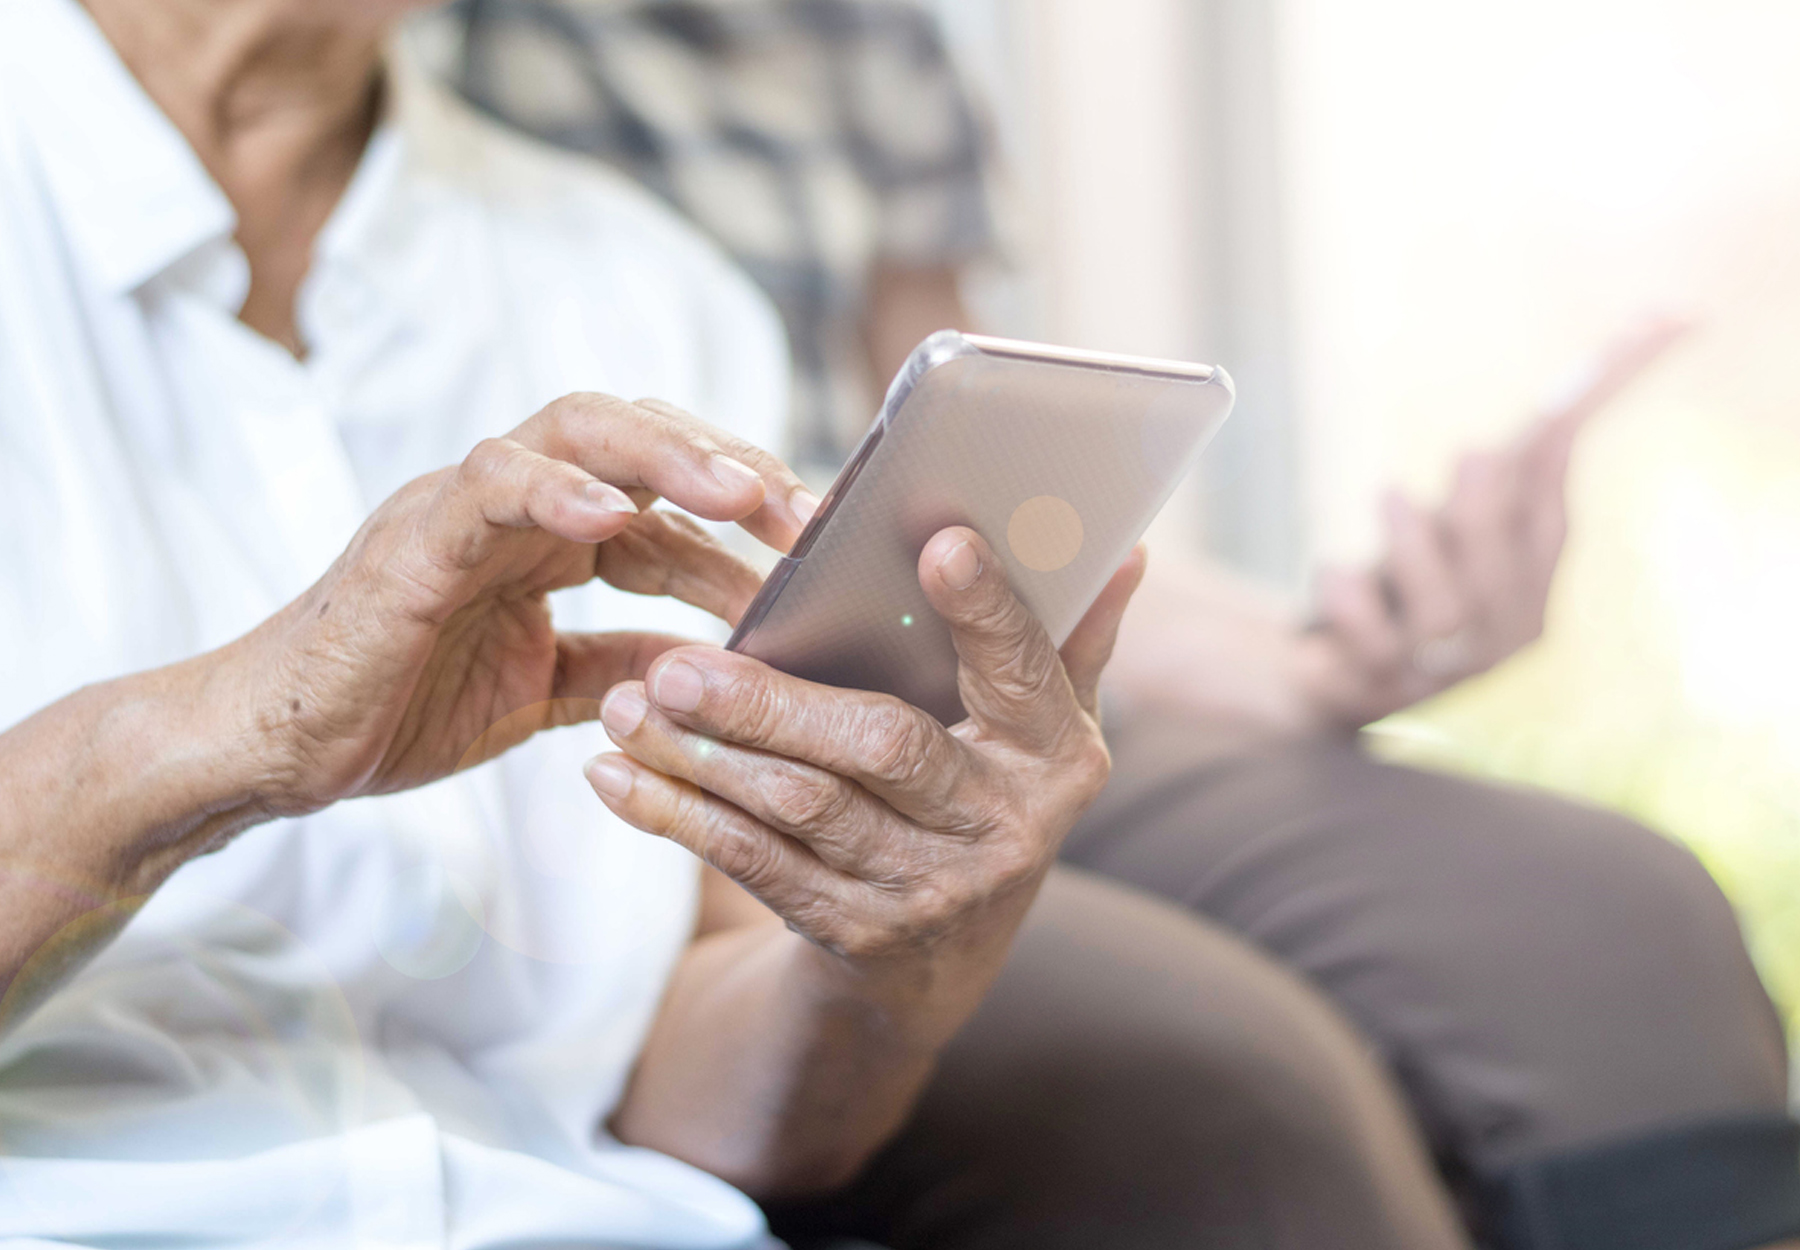 A closeup of an elderly person using a smartphone.